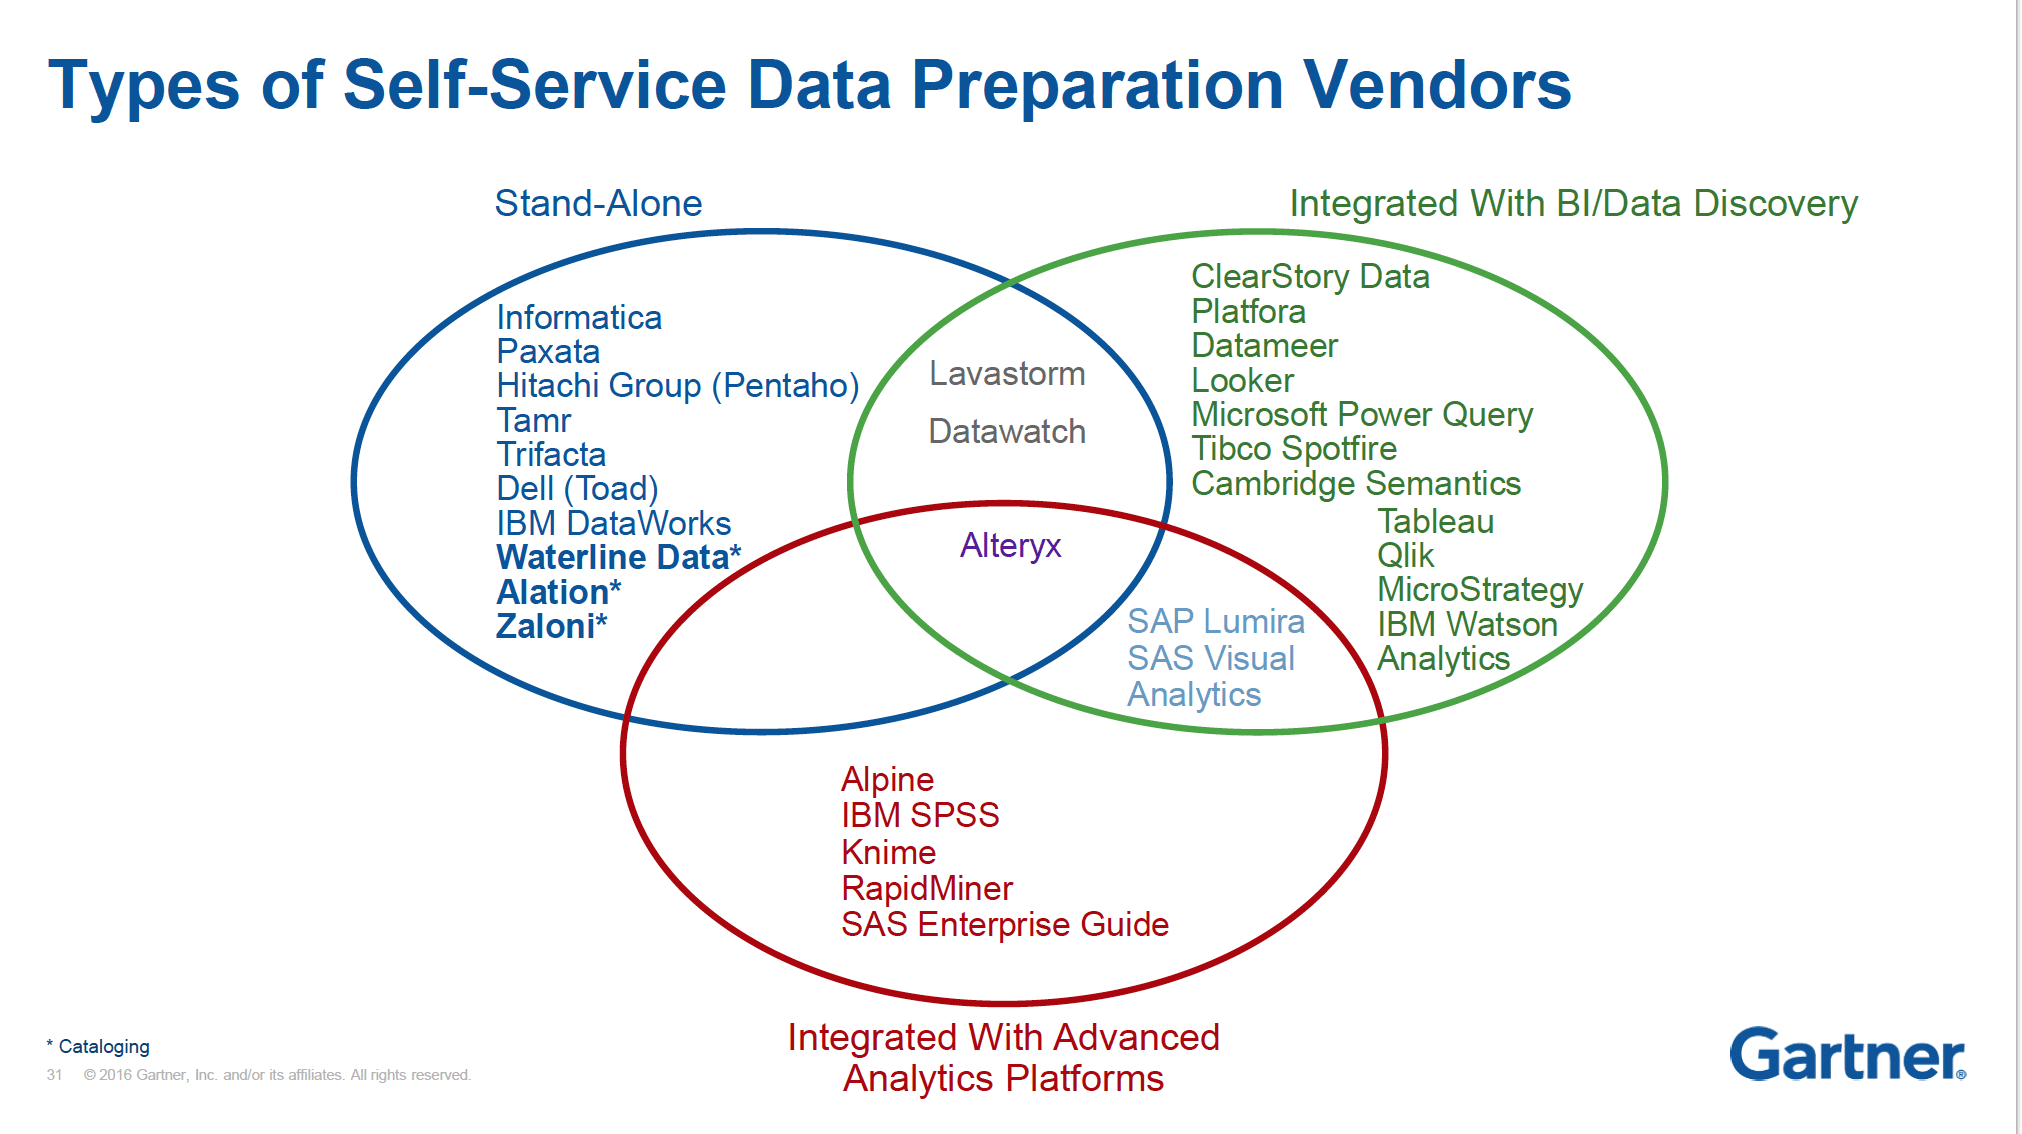 Types of Self-Service Data Preparation Vendors